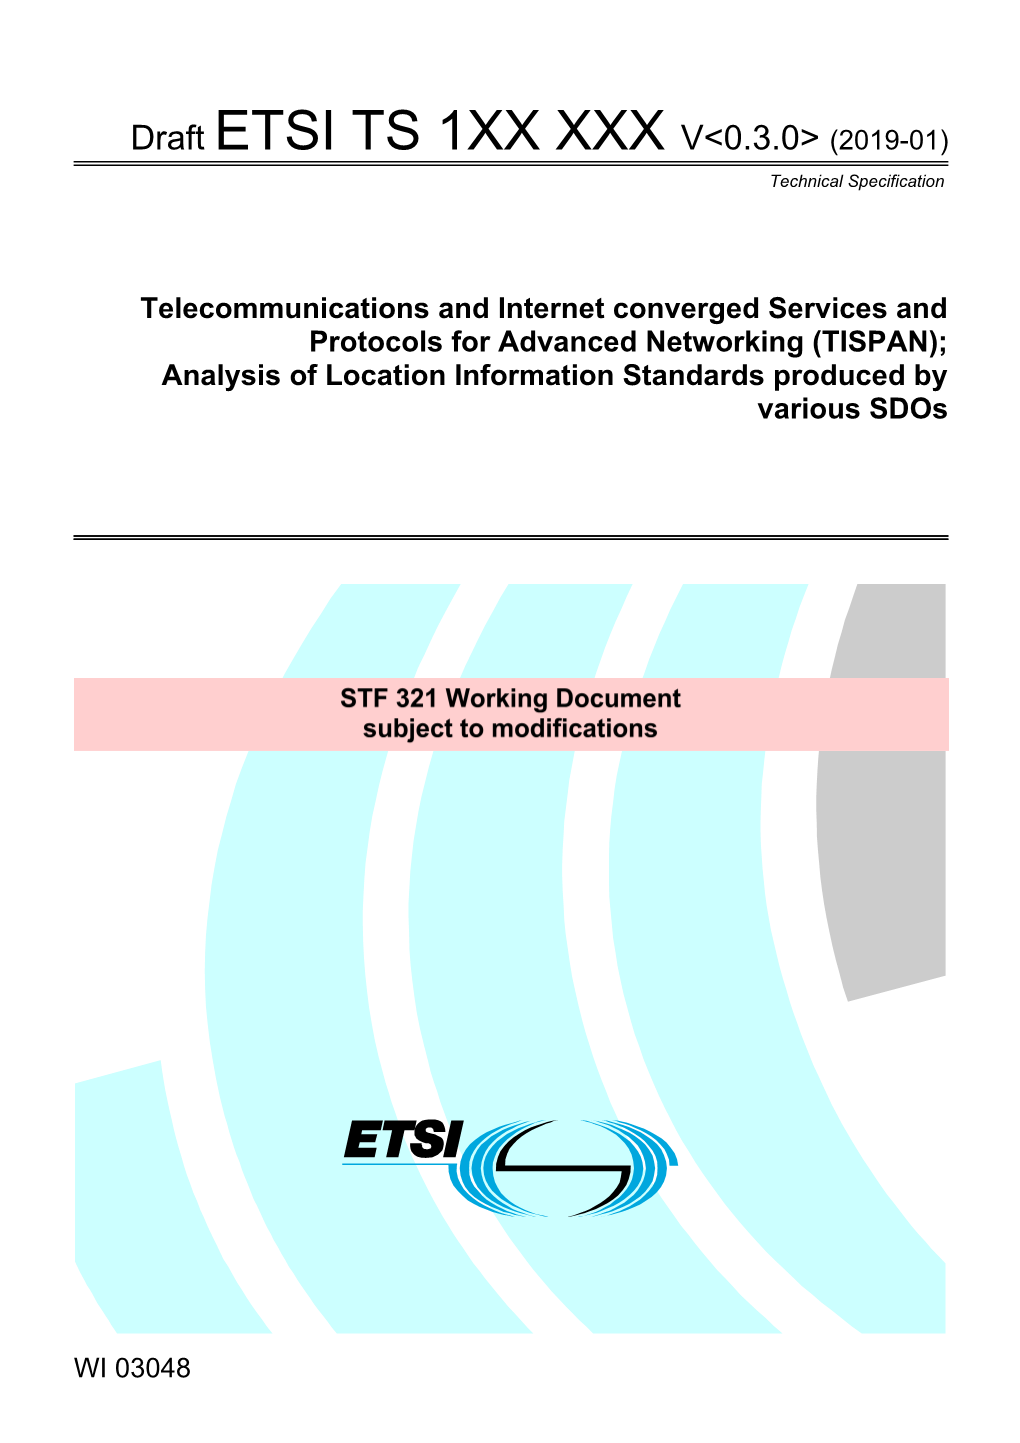 Draft ETSI TS 1XX XXX V&lt;0.3.0&gt;(2007-07)